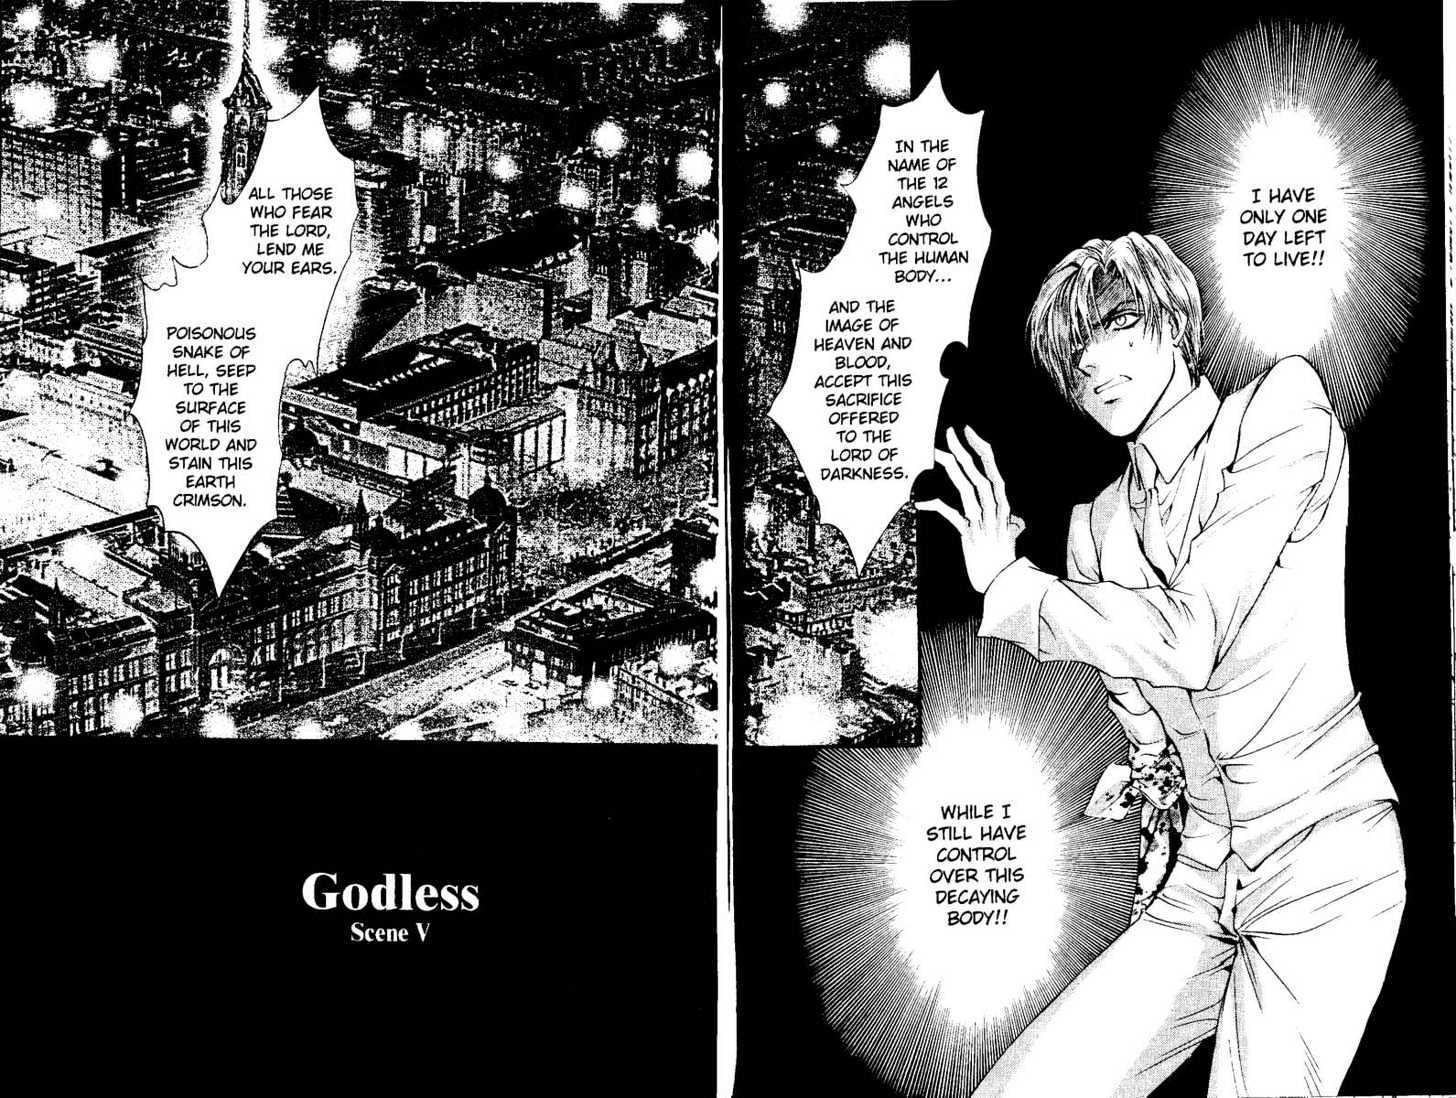 God Child - Page 1